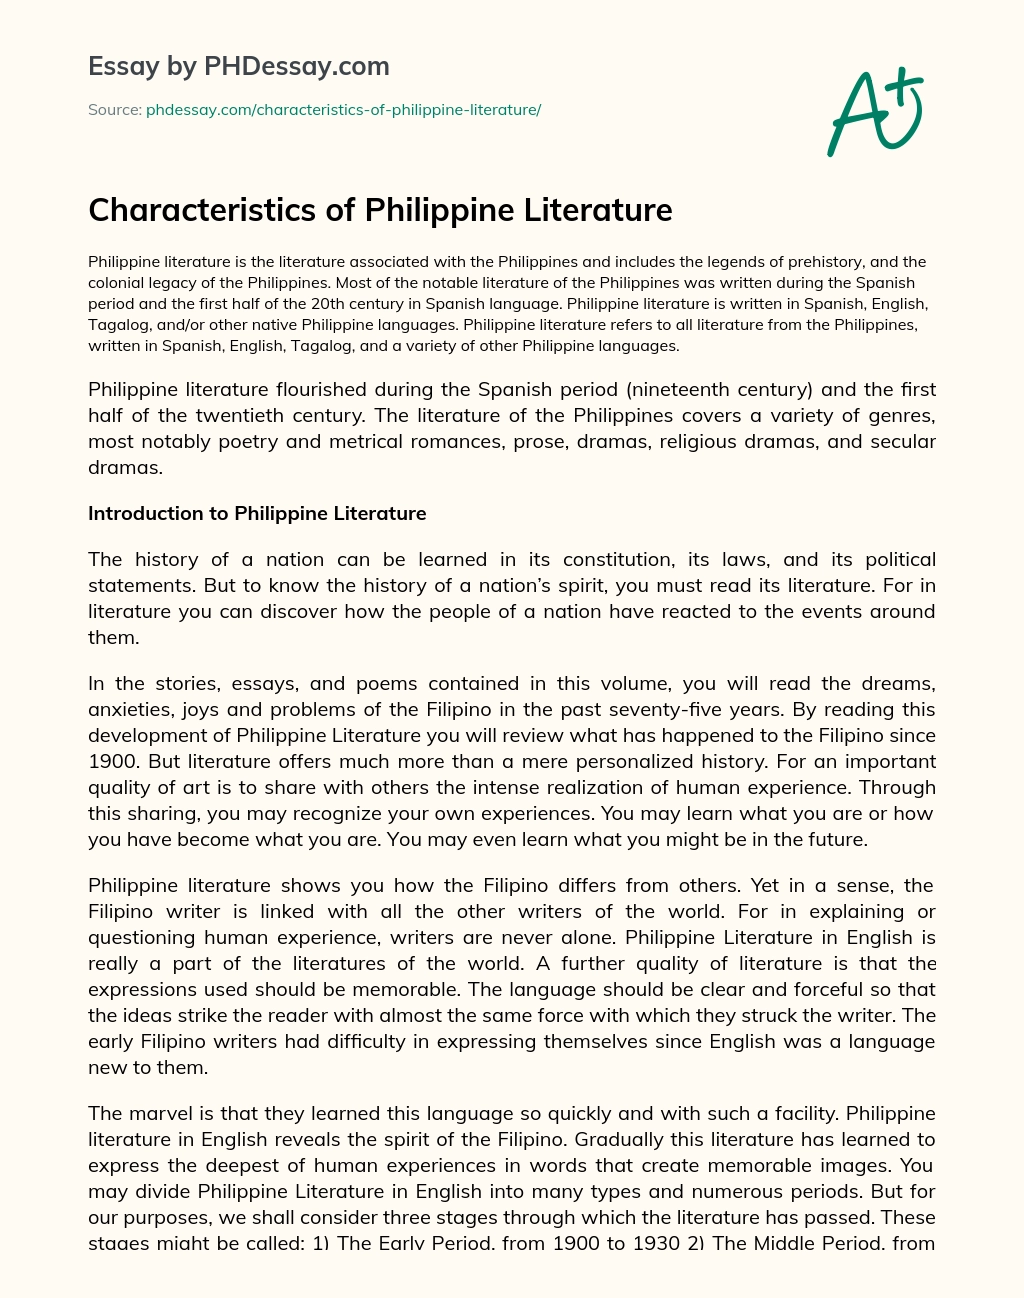 Characteristics of Philippine Literature essay